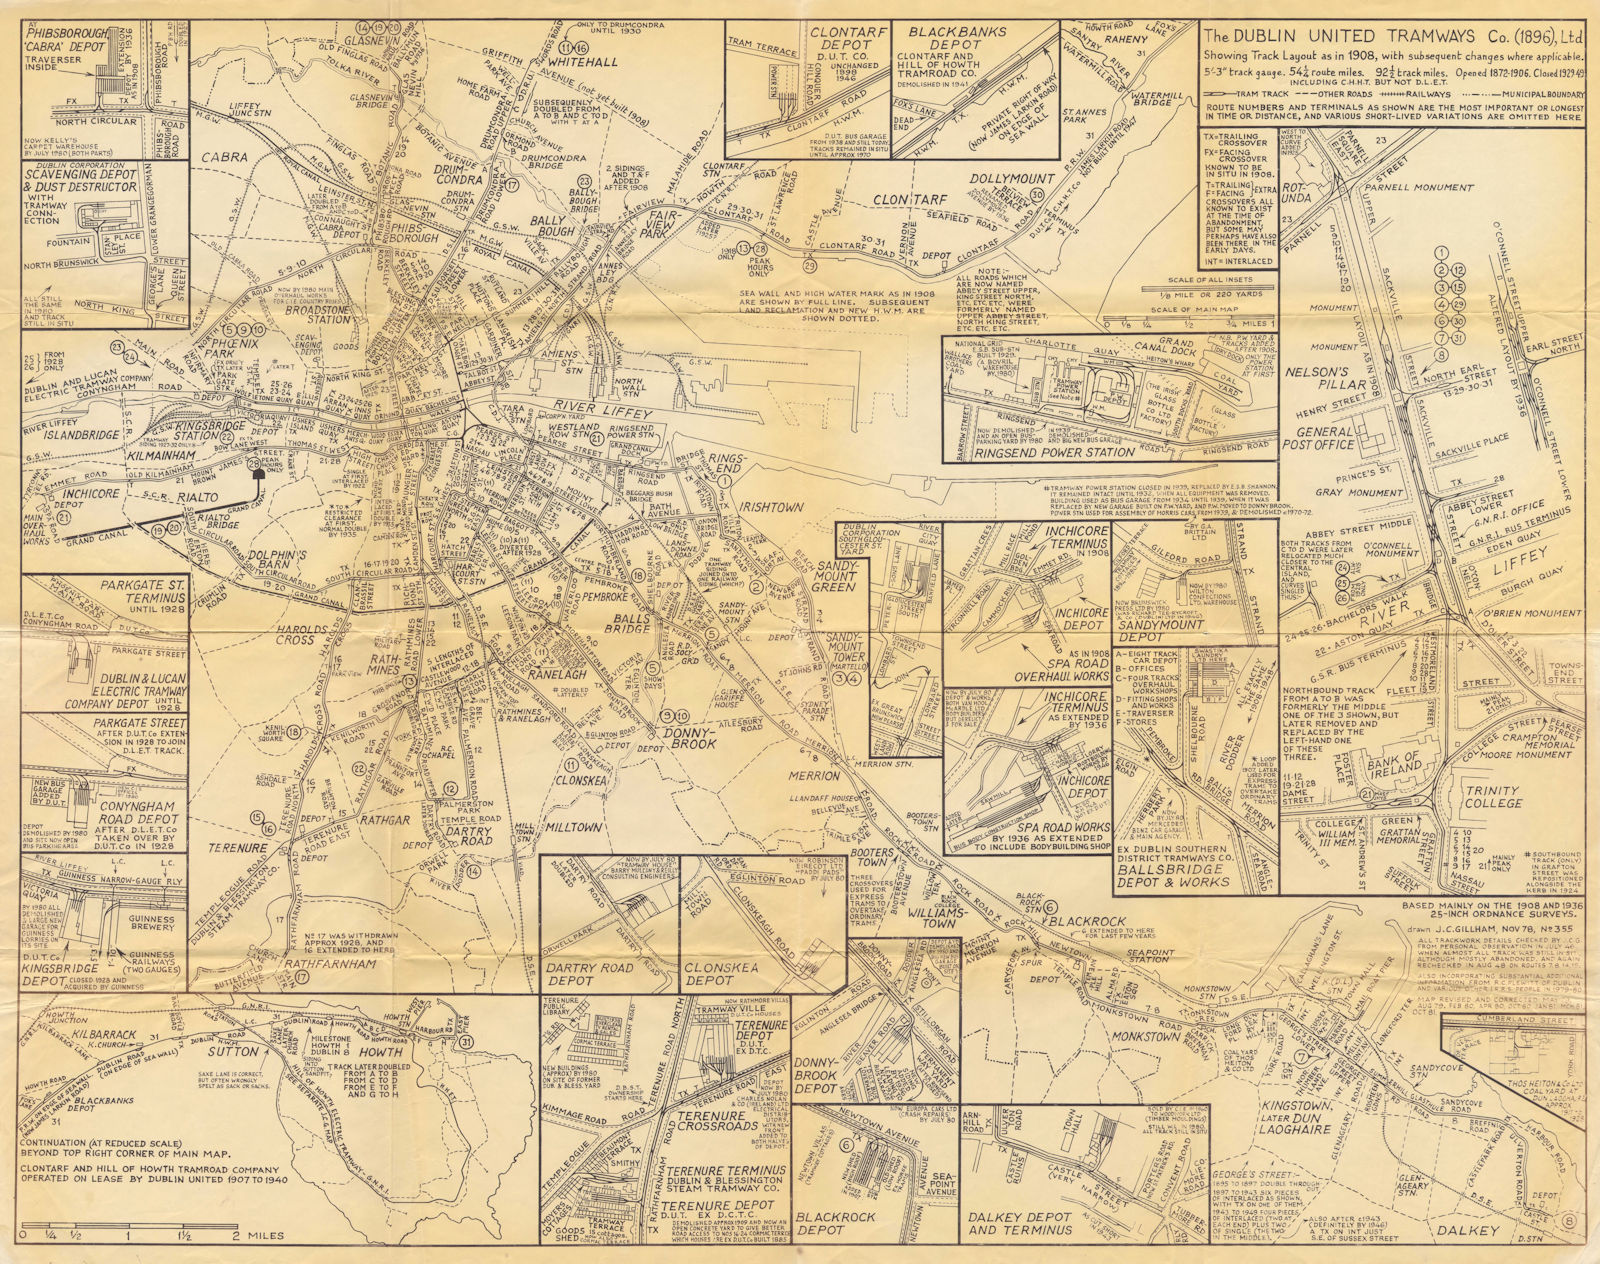 'Dublin United Tramways' track layout in 1908. Railways, roads. GILLHAM 1981 map